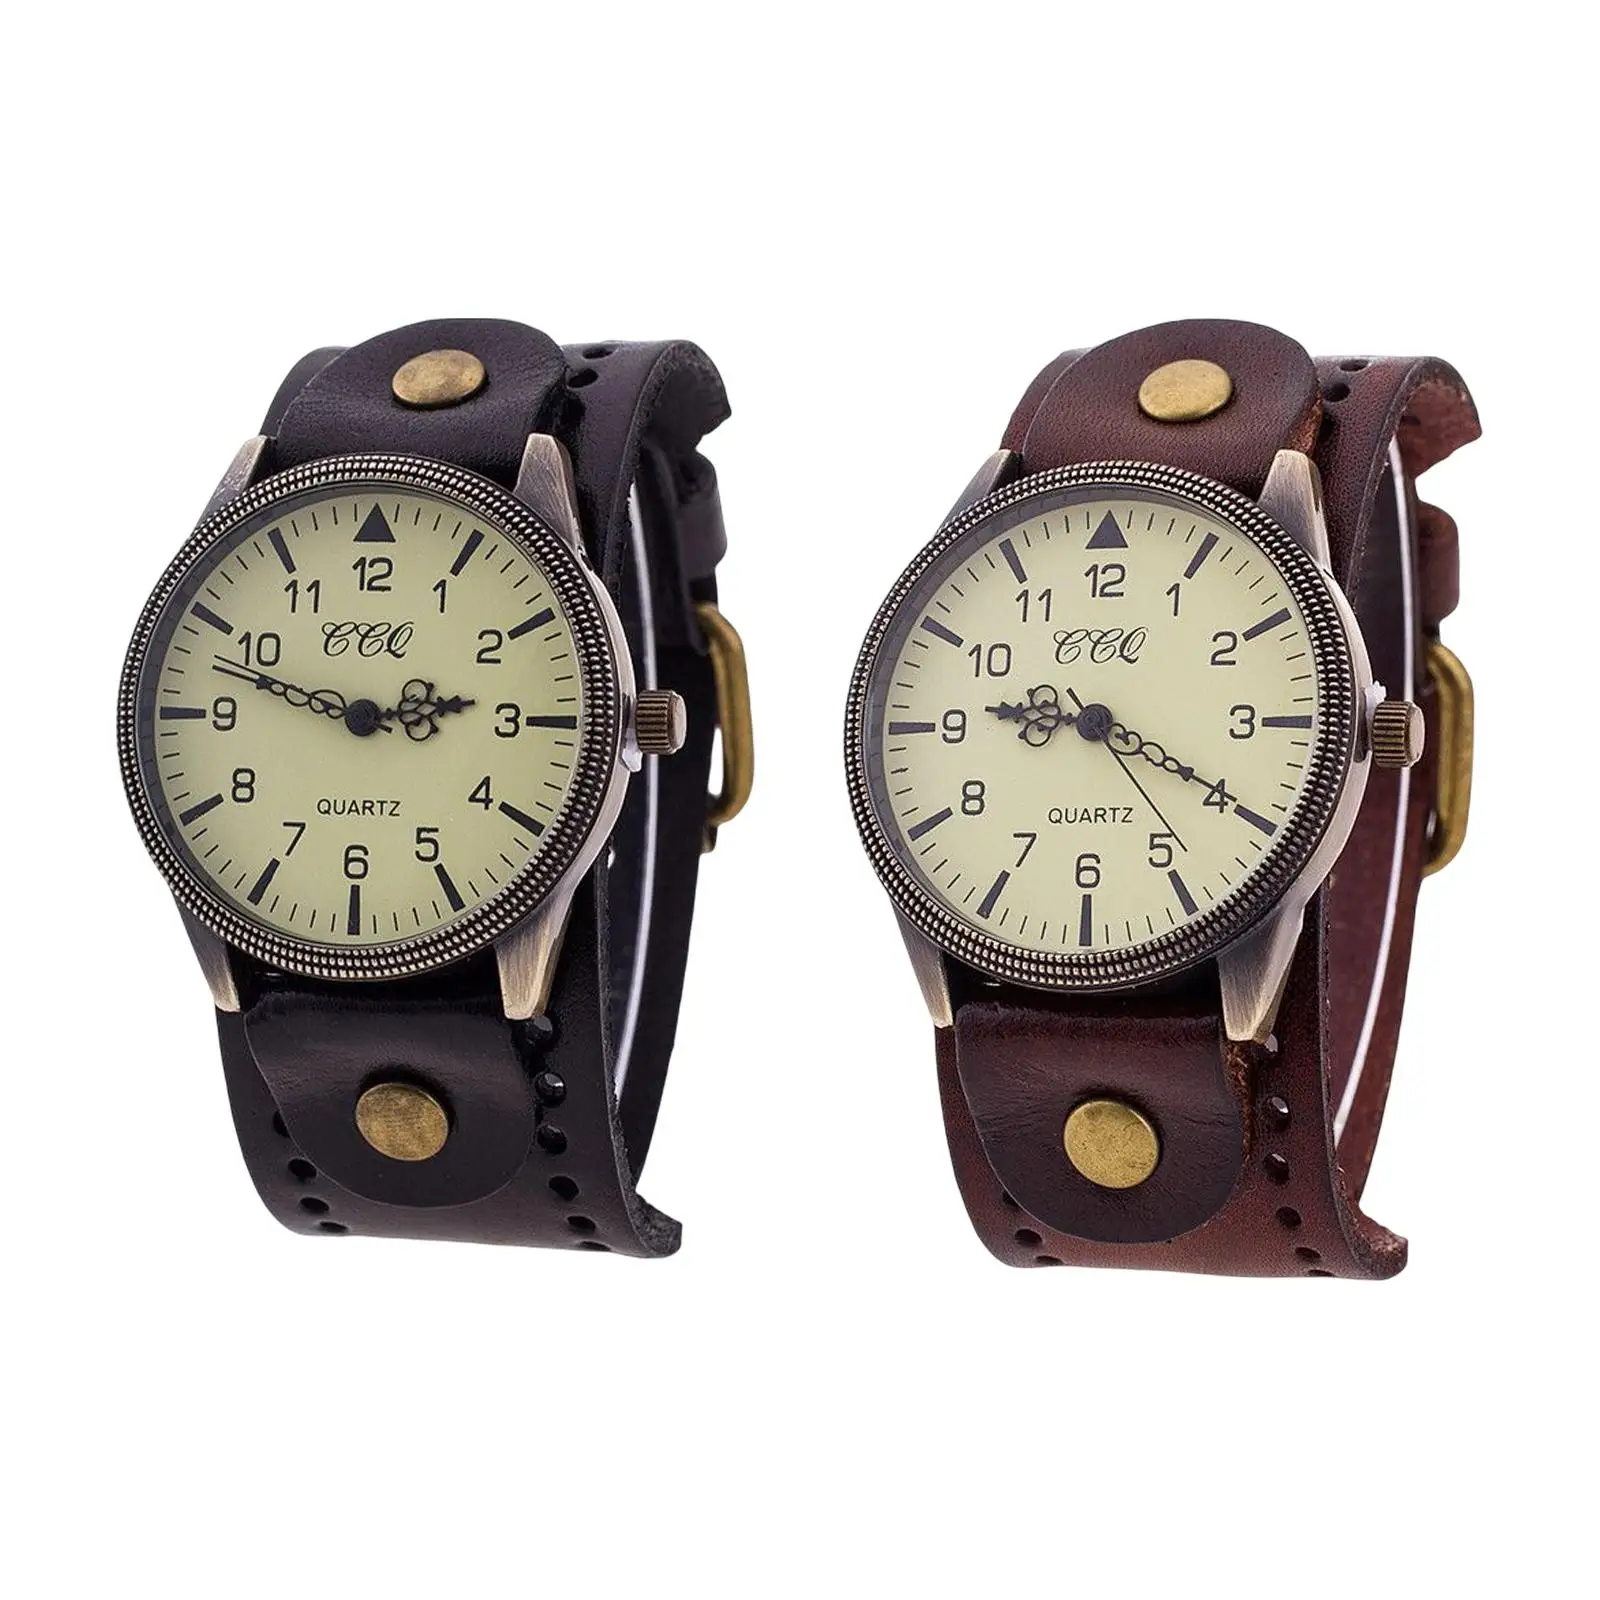 Retro Watch Bracelet PU Leather Male Watch Band Cuff Hybrid Design Wristwatch for Men Women Bracelet Watch Band Comfortable